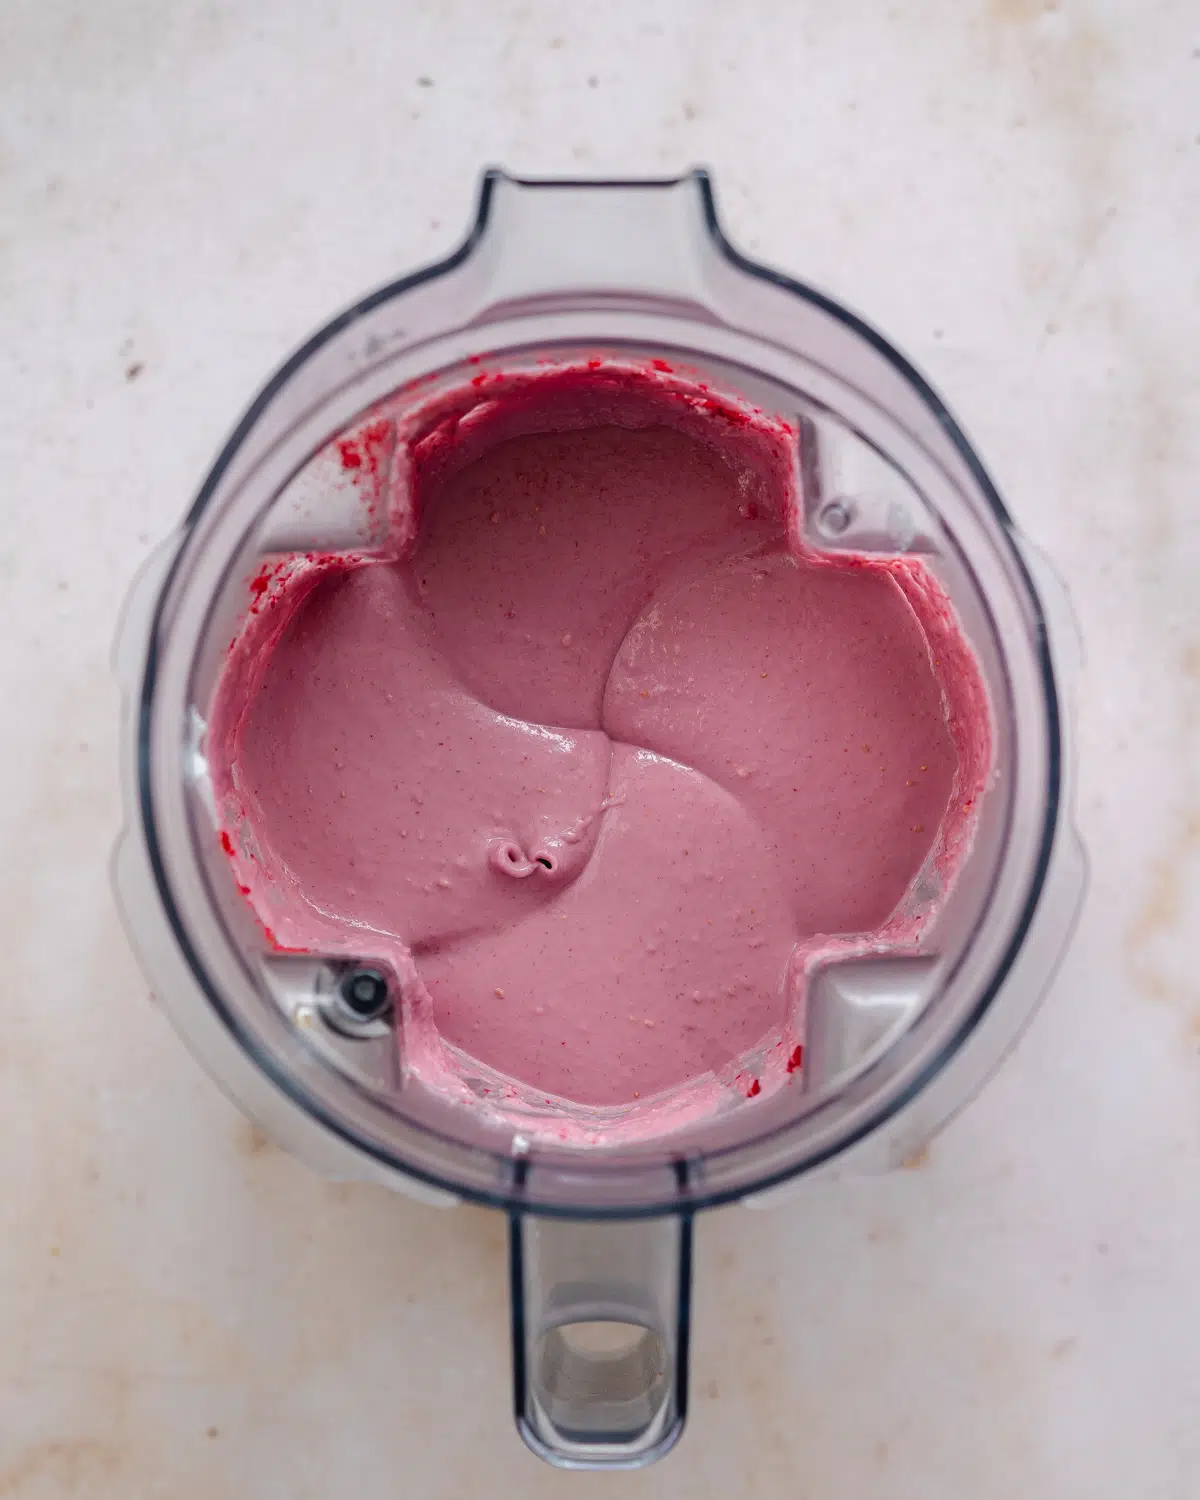 raspberry cheesecake filling in a blender jug.